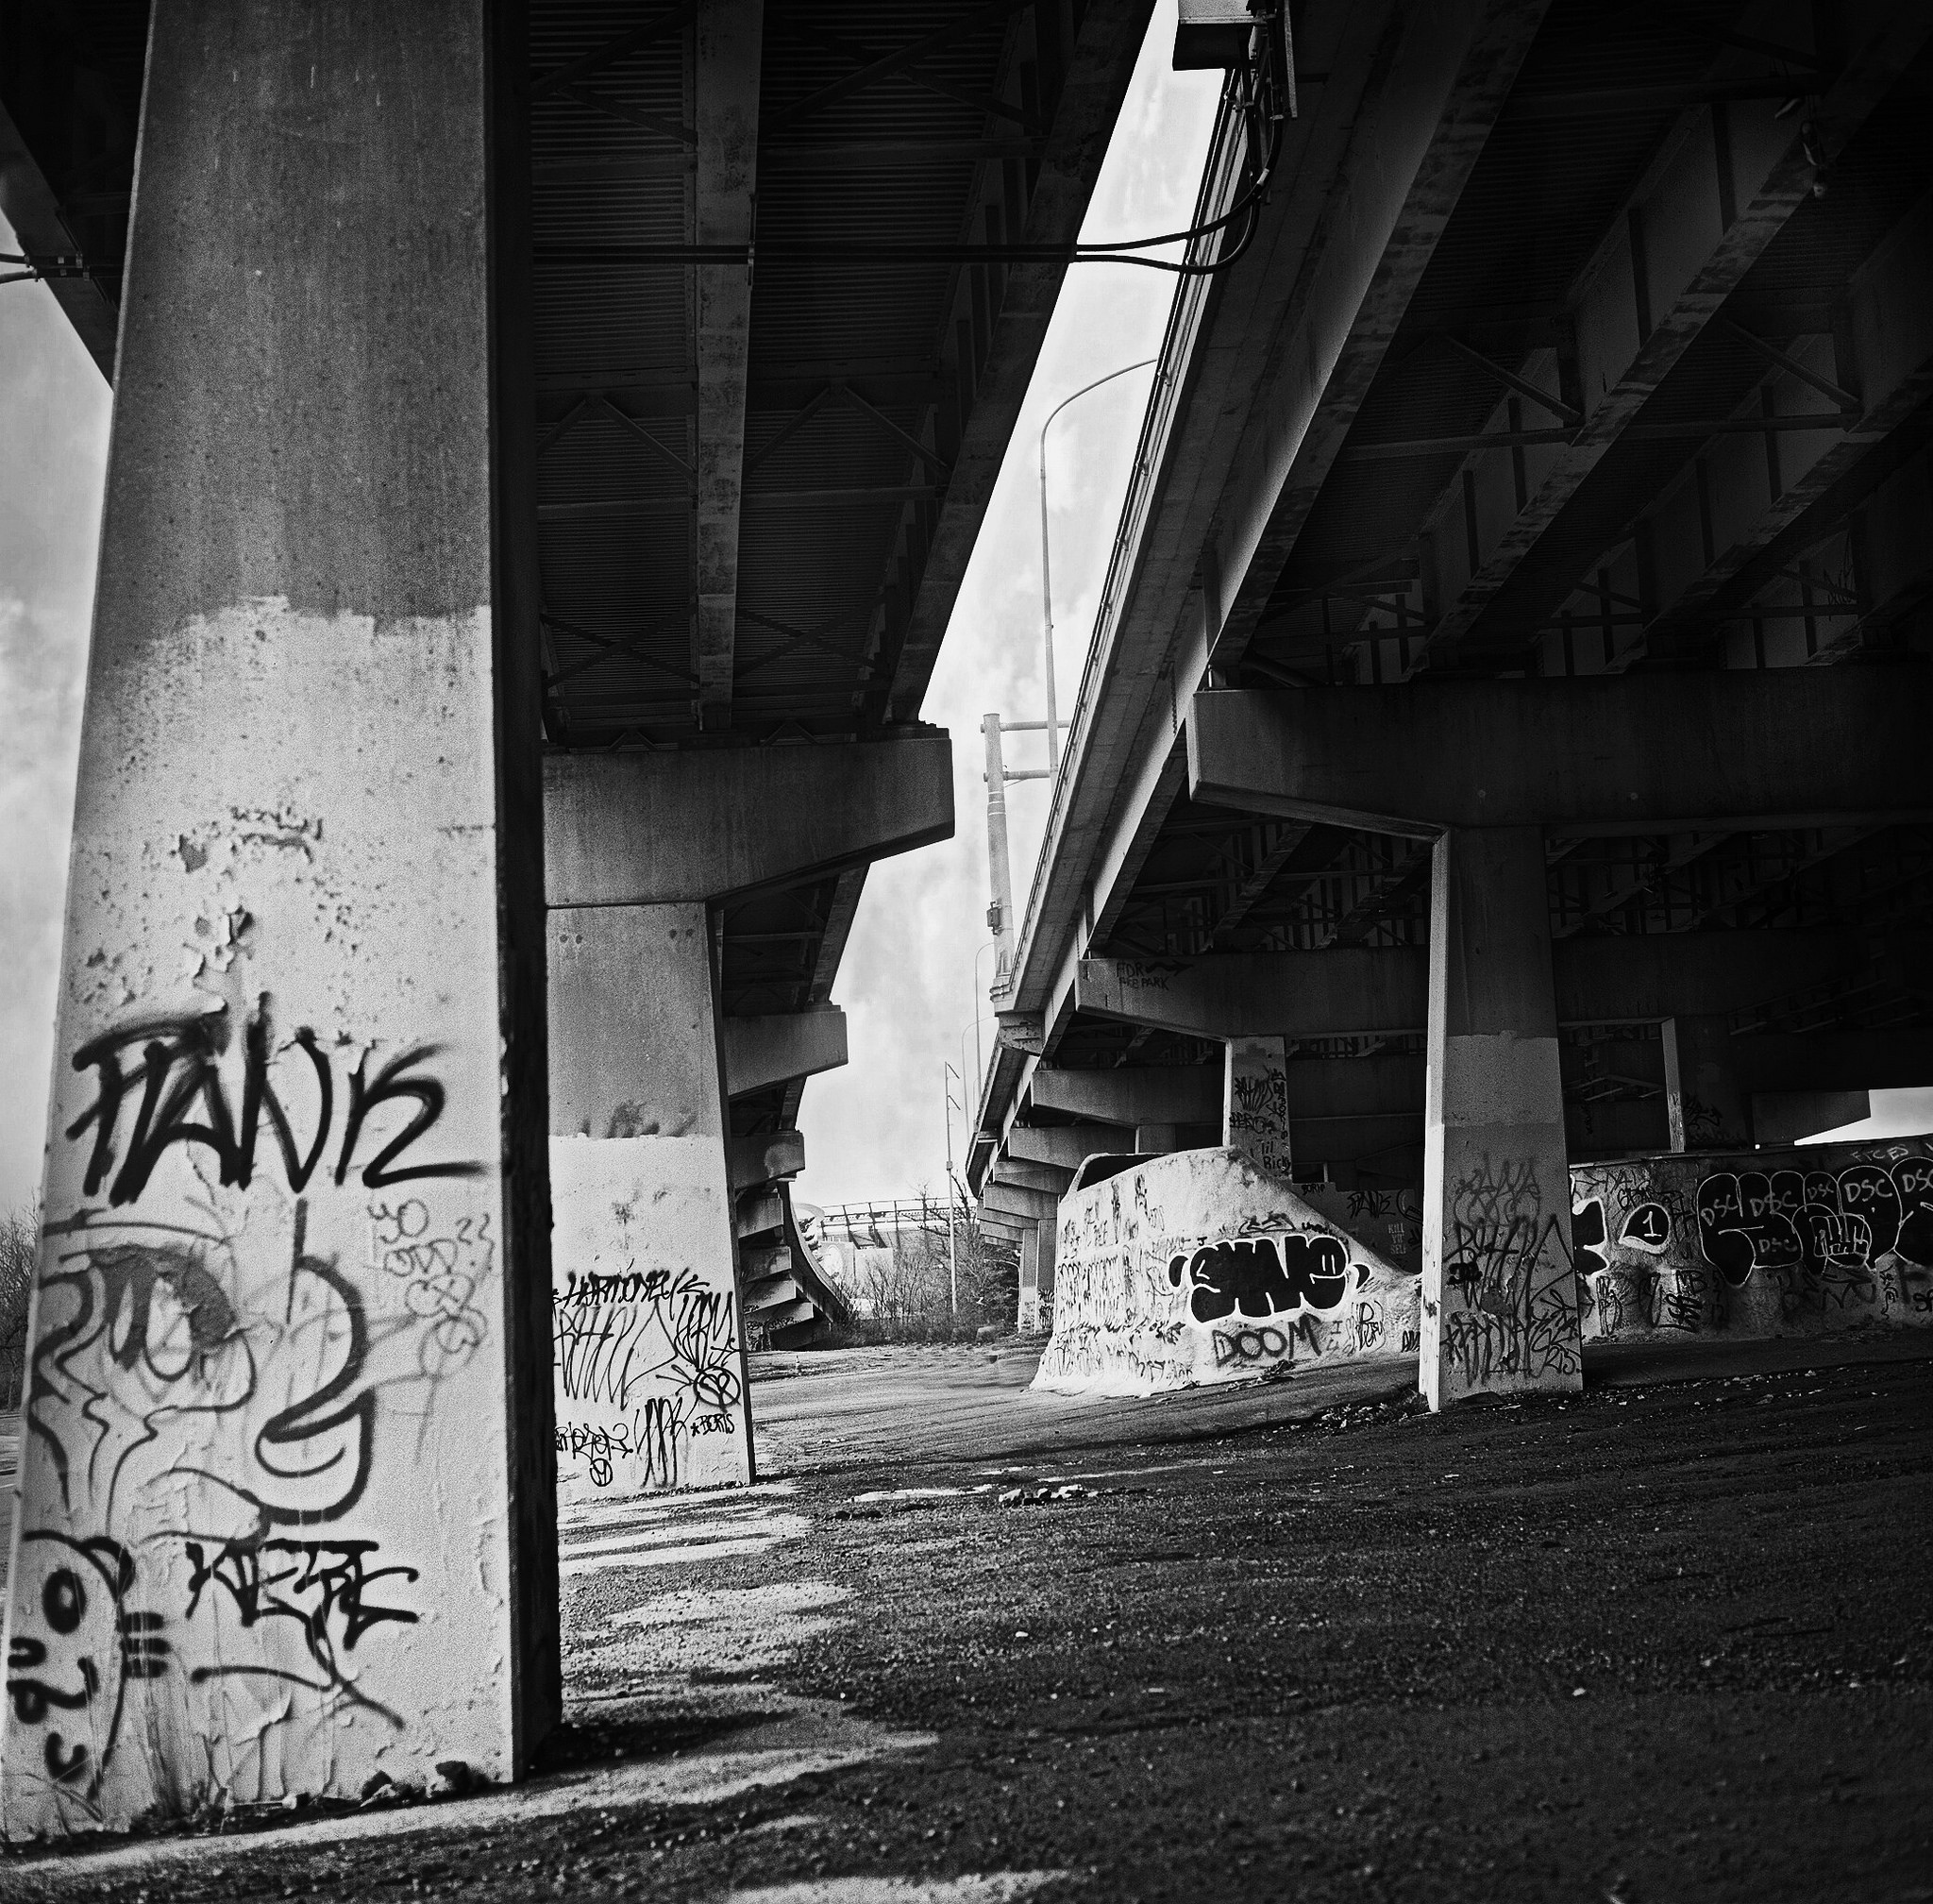 Under I-95 | David Swift, EOTS Flickr Group